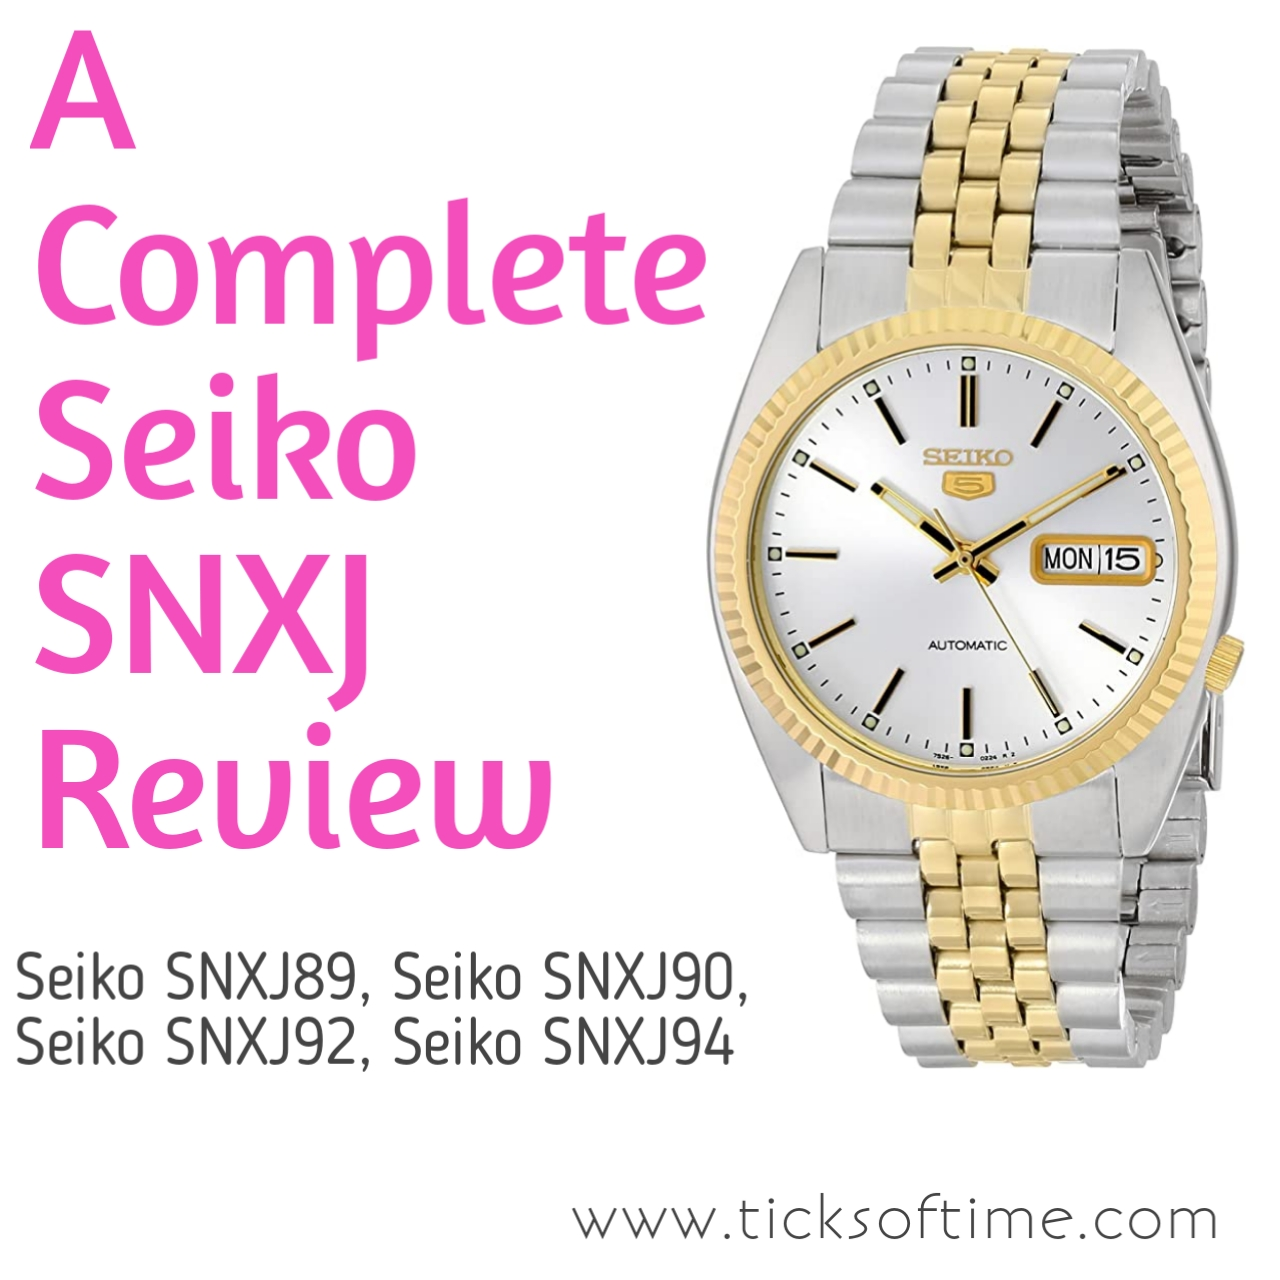 A Complete Seiko SNXJ Review- A to Z (Seiko SNXJ89, Seiko SNXJ90, Seiko SNXJ92, Seiko SNXJ94) » Ticks Of Time